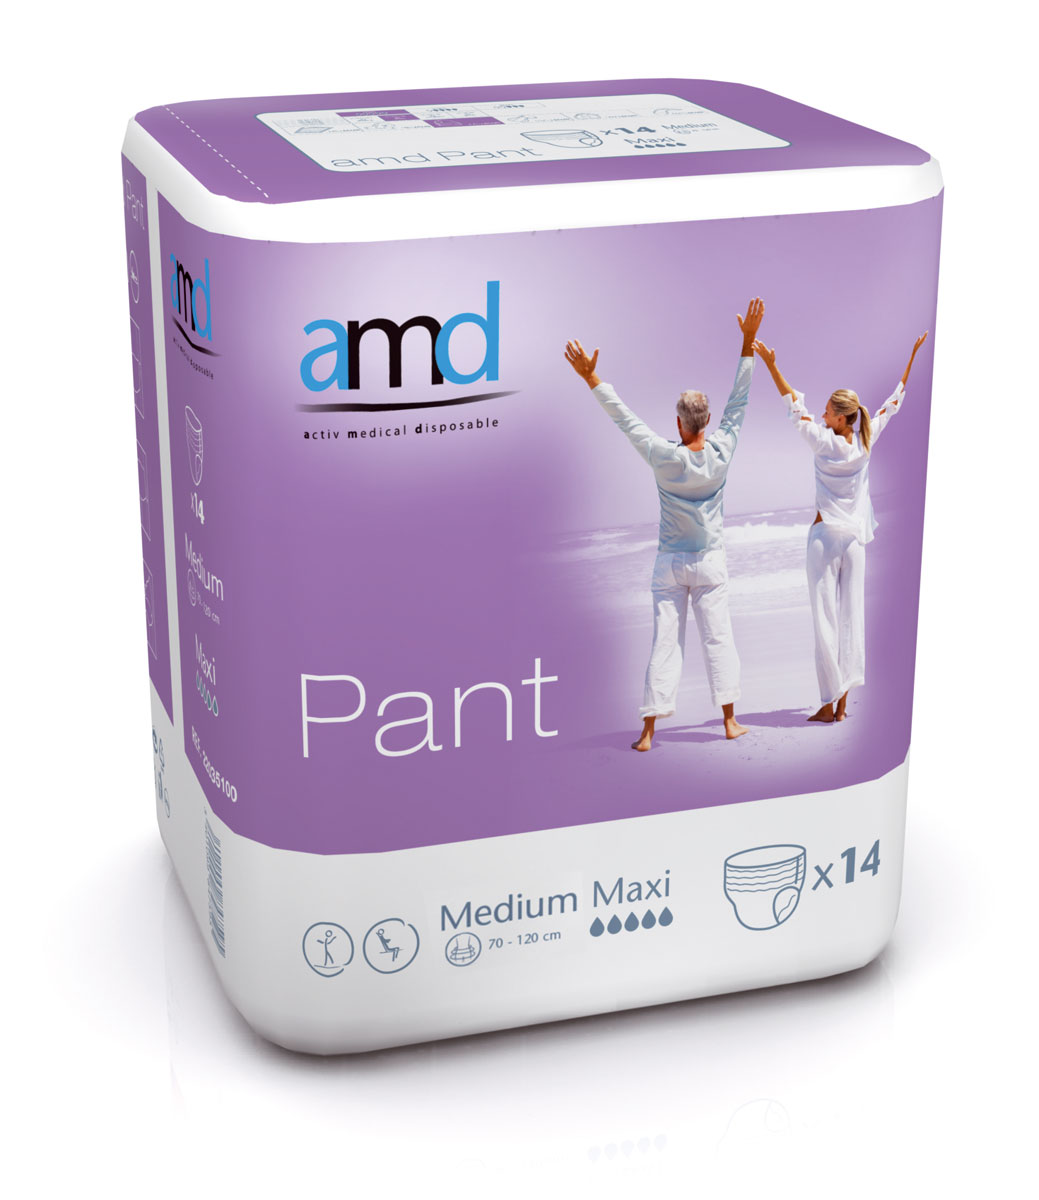 AMD Pant (MAXI) - saugstarke Inkontinenzpants - Gr. Medium (M) - 14 Stück Beutel